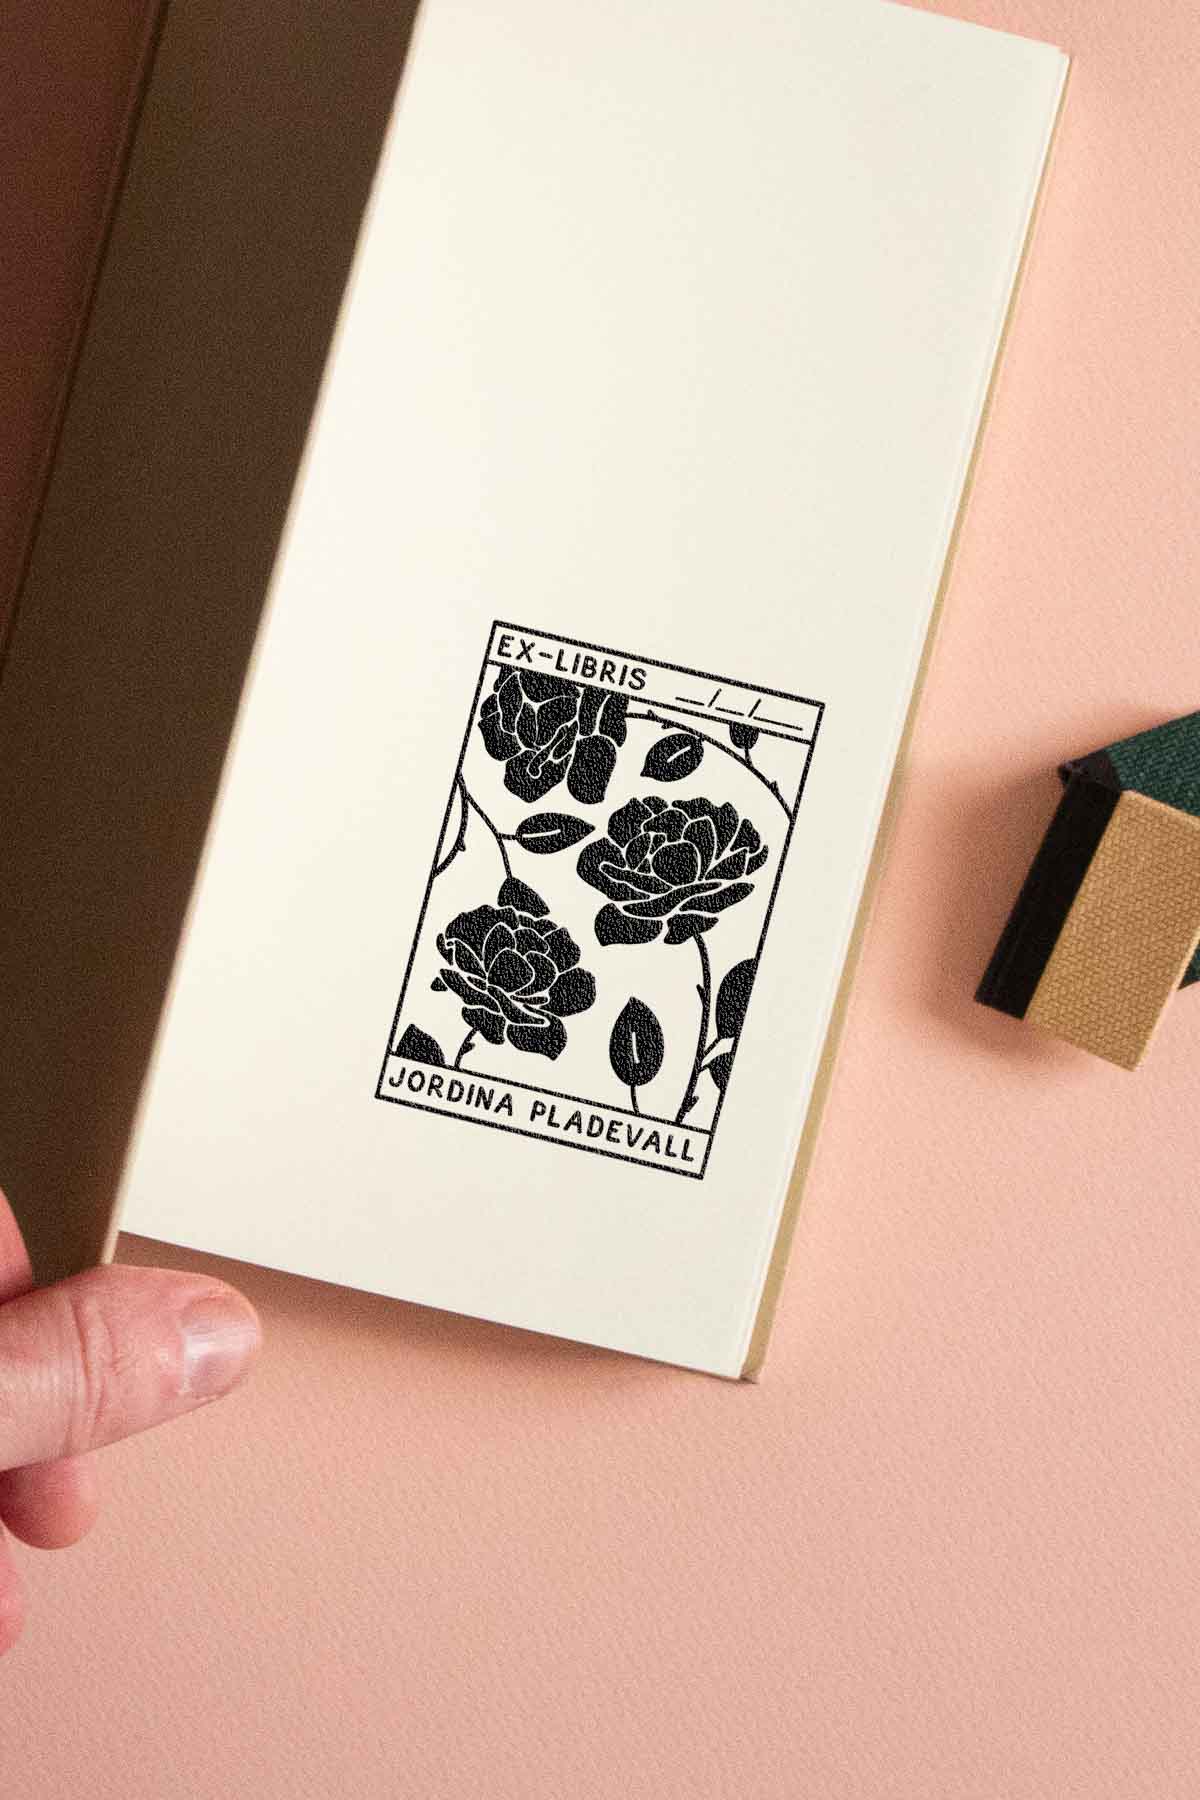 Portadilla de libro estampada con sello ex libris de rosas dentro de un recuadro